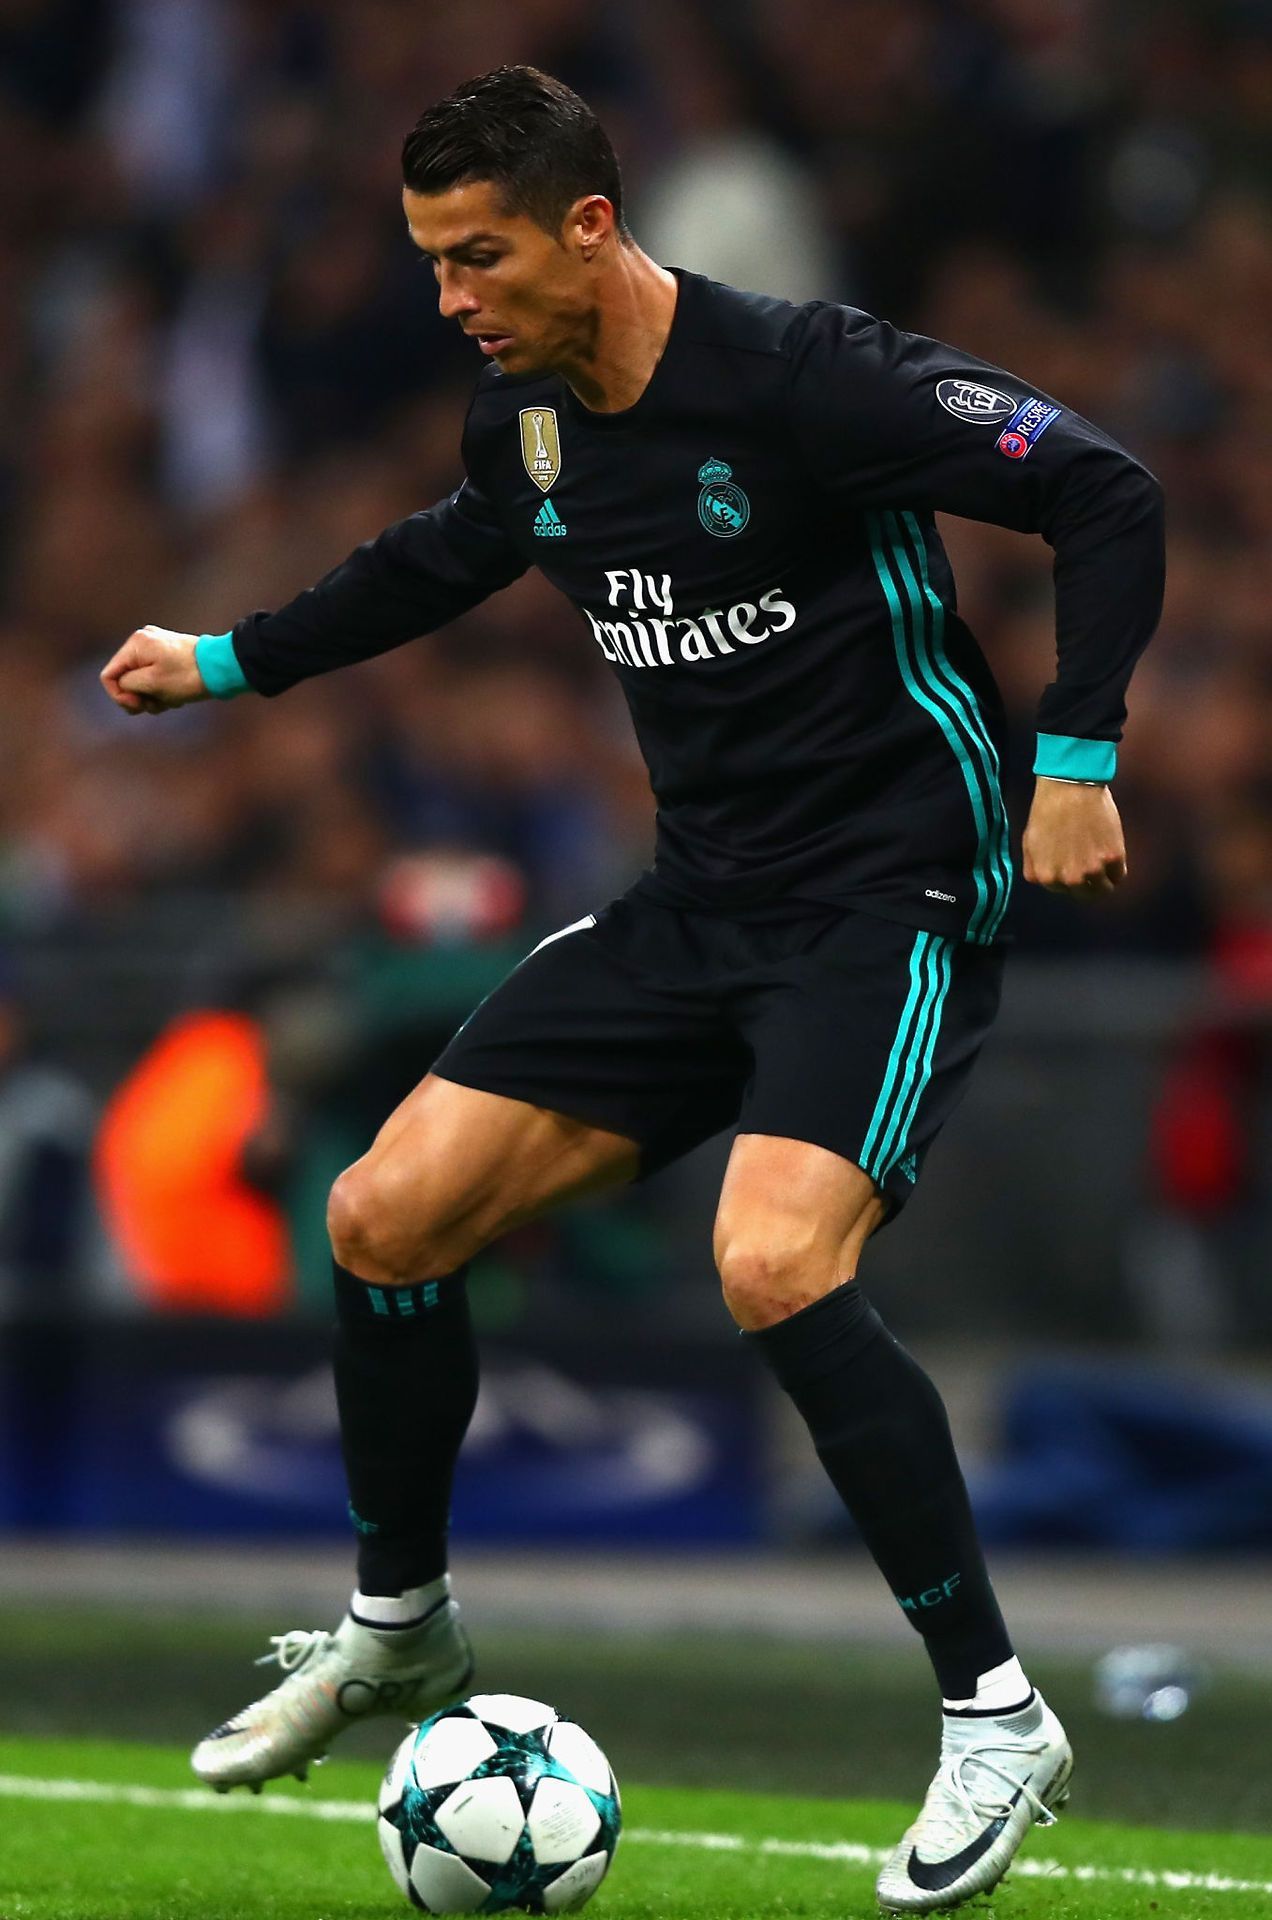 Cristiano Ronaldo in action for Real Madrid in the Champions League. - Cristiano Ronaldo